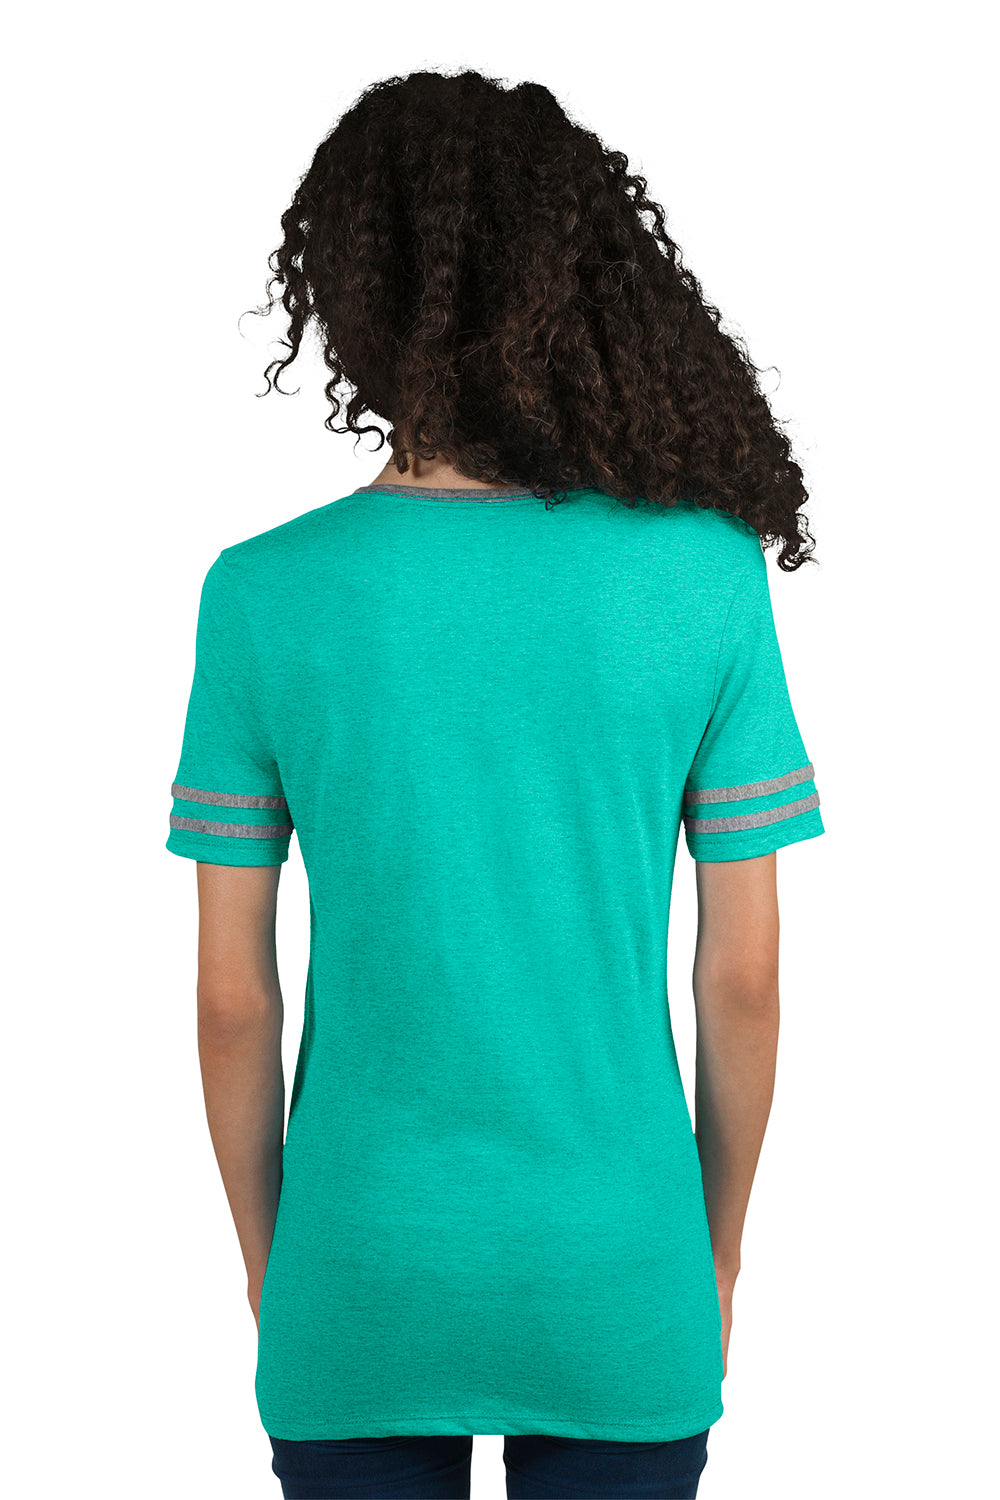 Jerzees 602WVR Womens Varsity Ringer Short Sleeve V-Neck T-Shirt Heather Mint Green/Oxford Grey Back